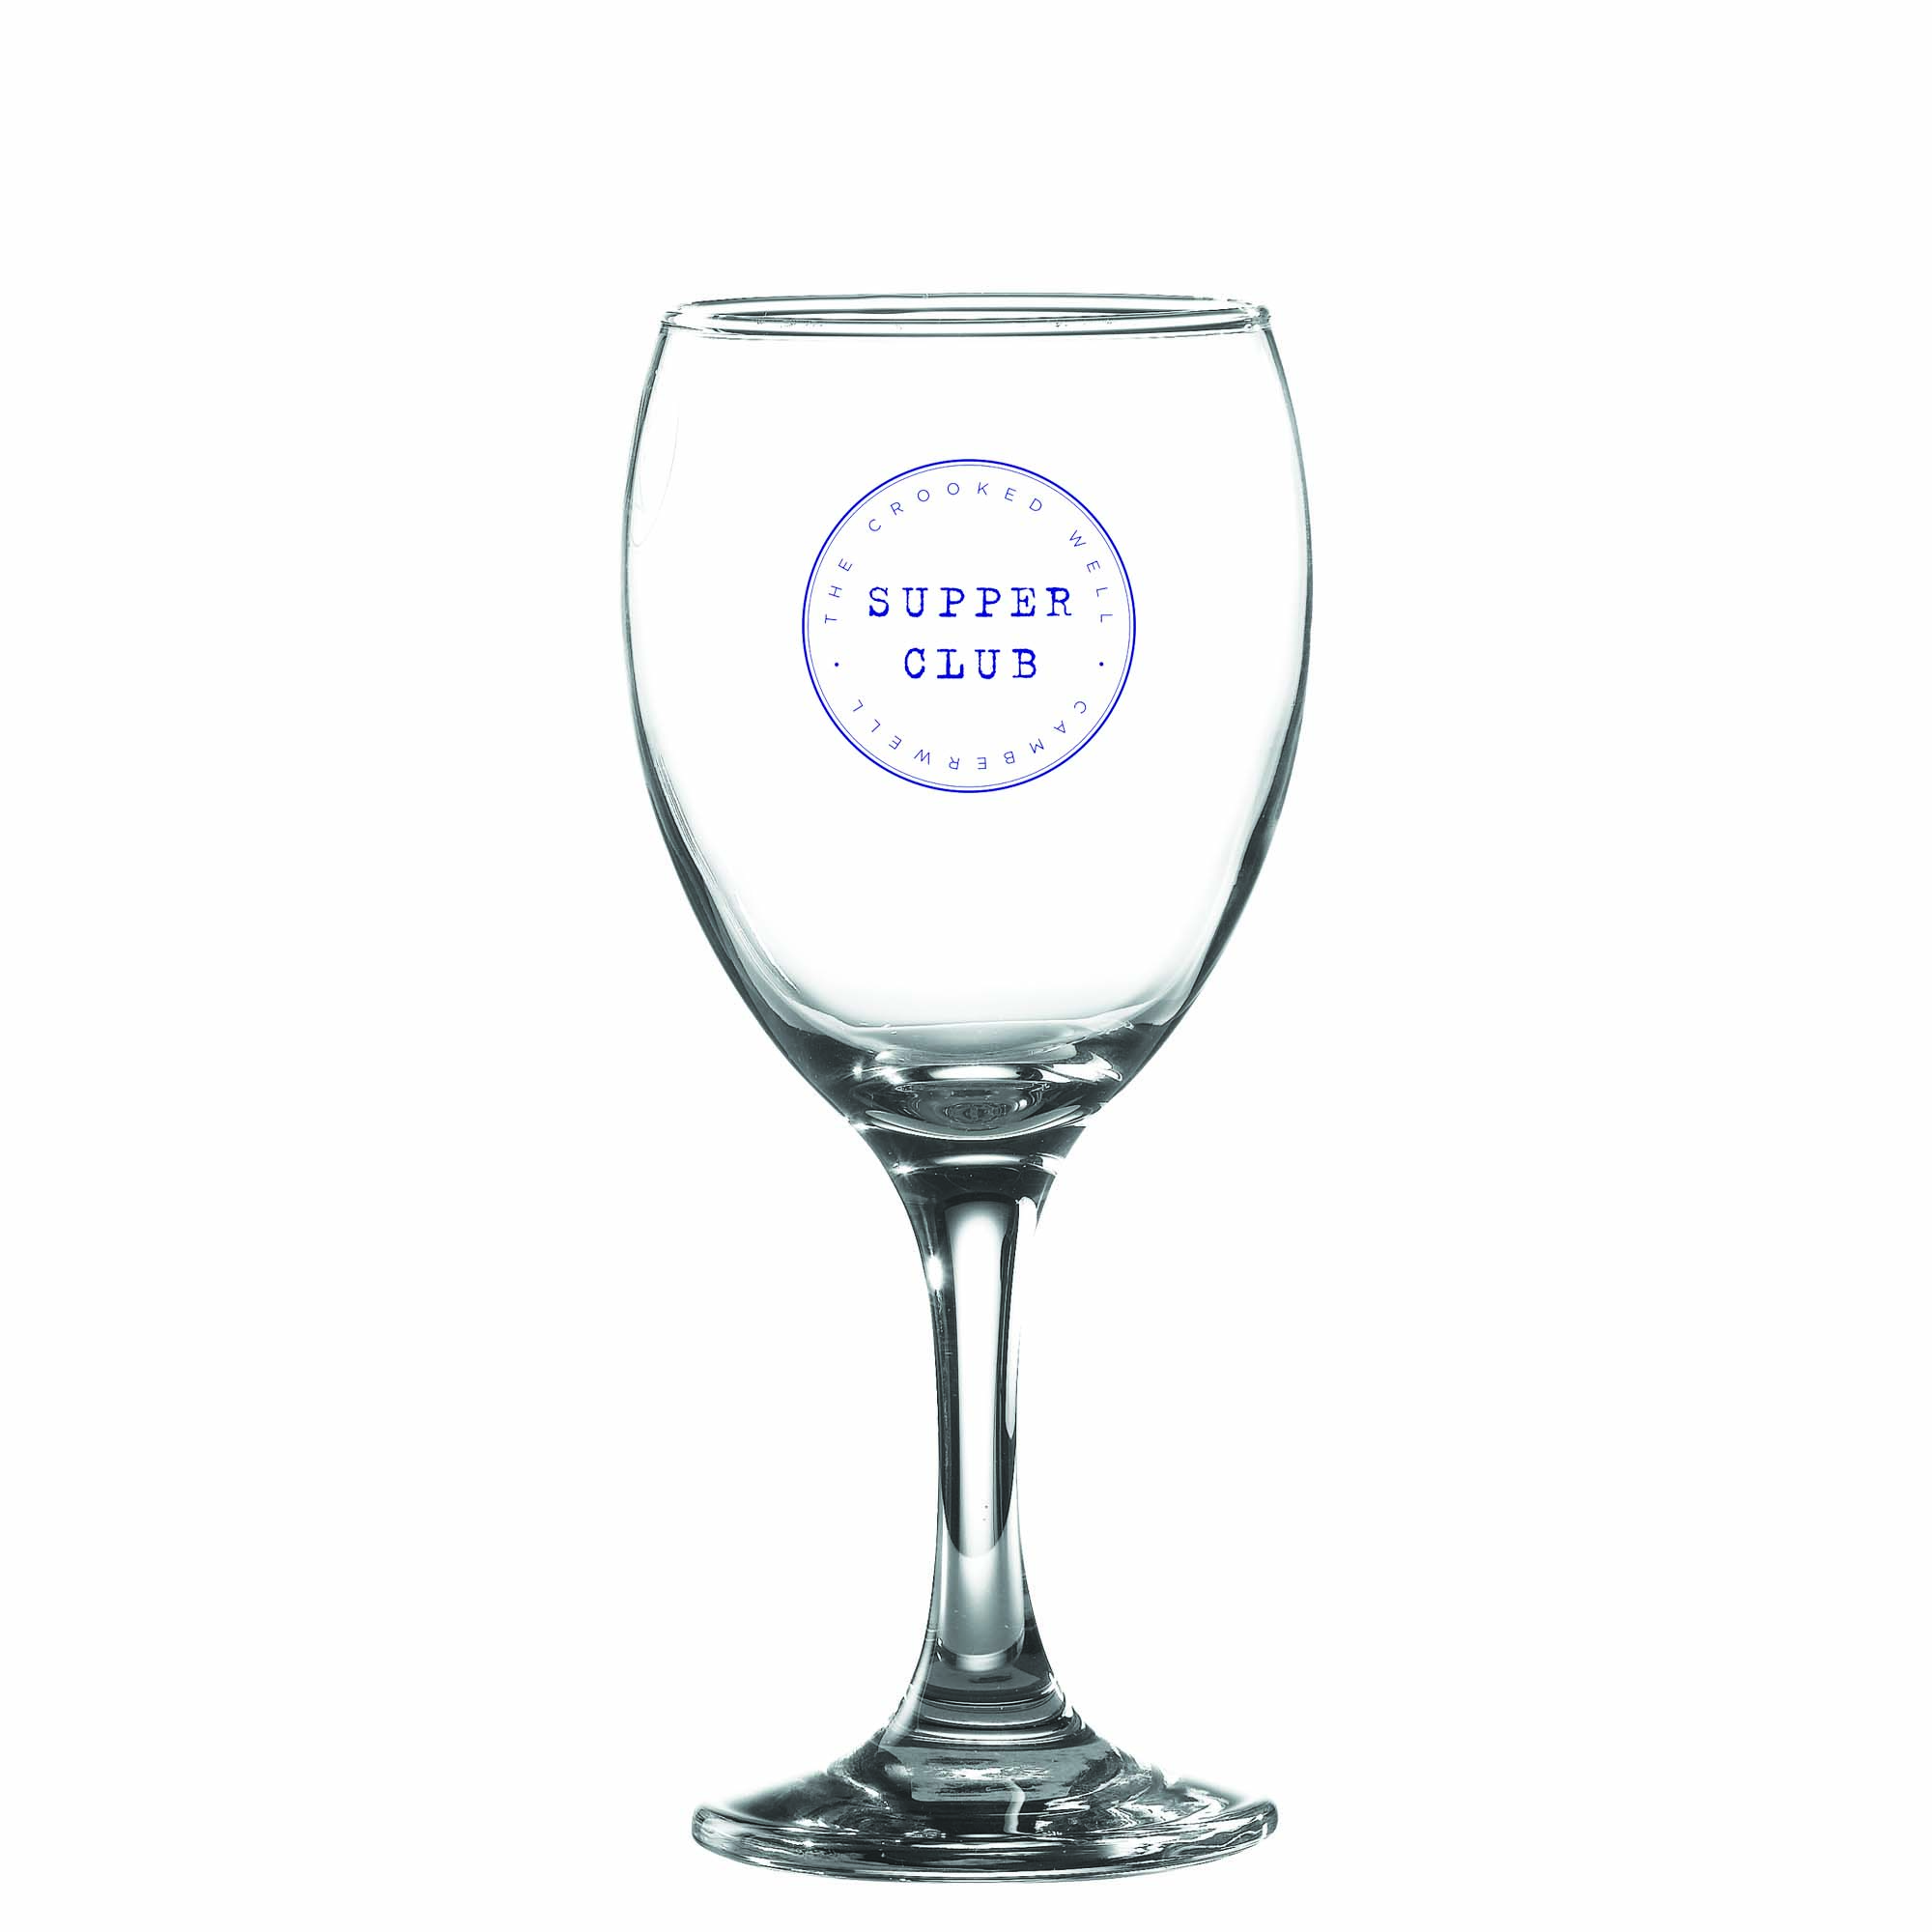 Empire Wine/Water Glass (340ml/12oz)